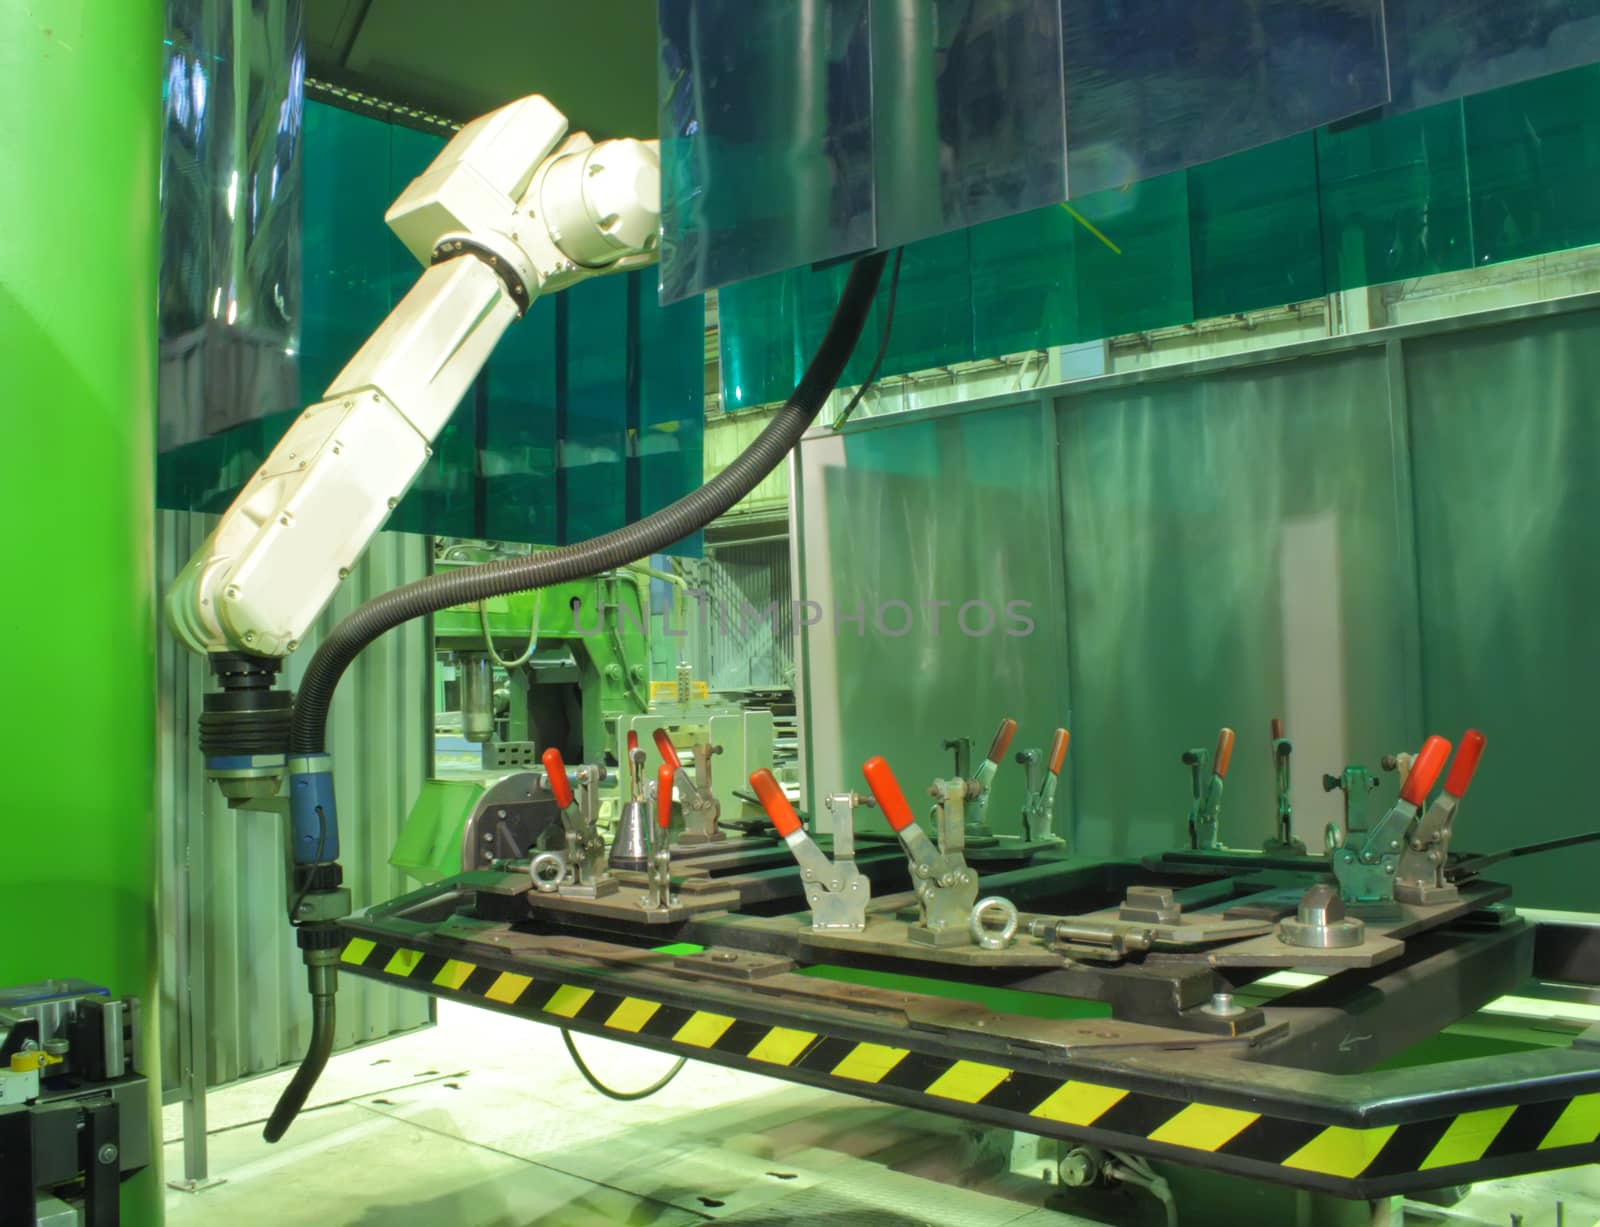 Working welding robot by Garsya